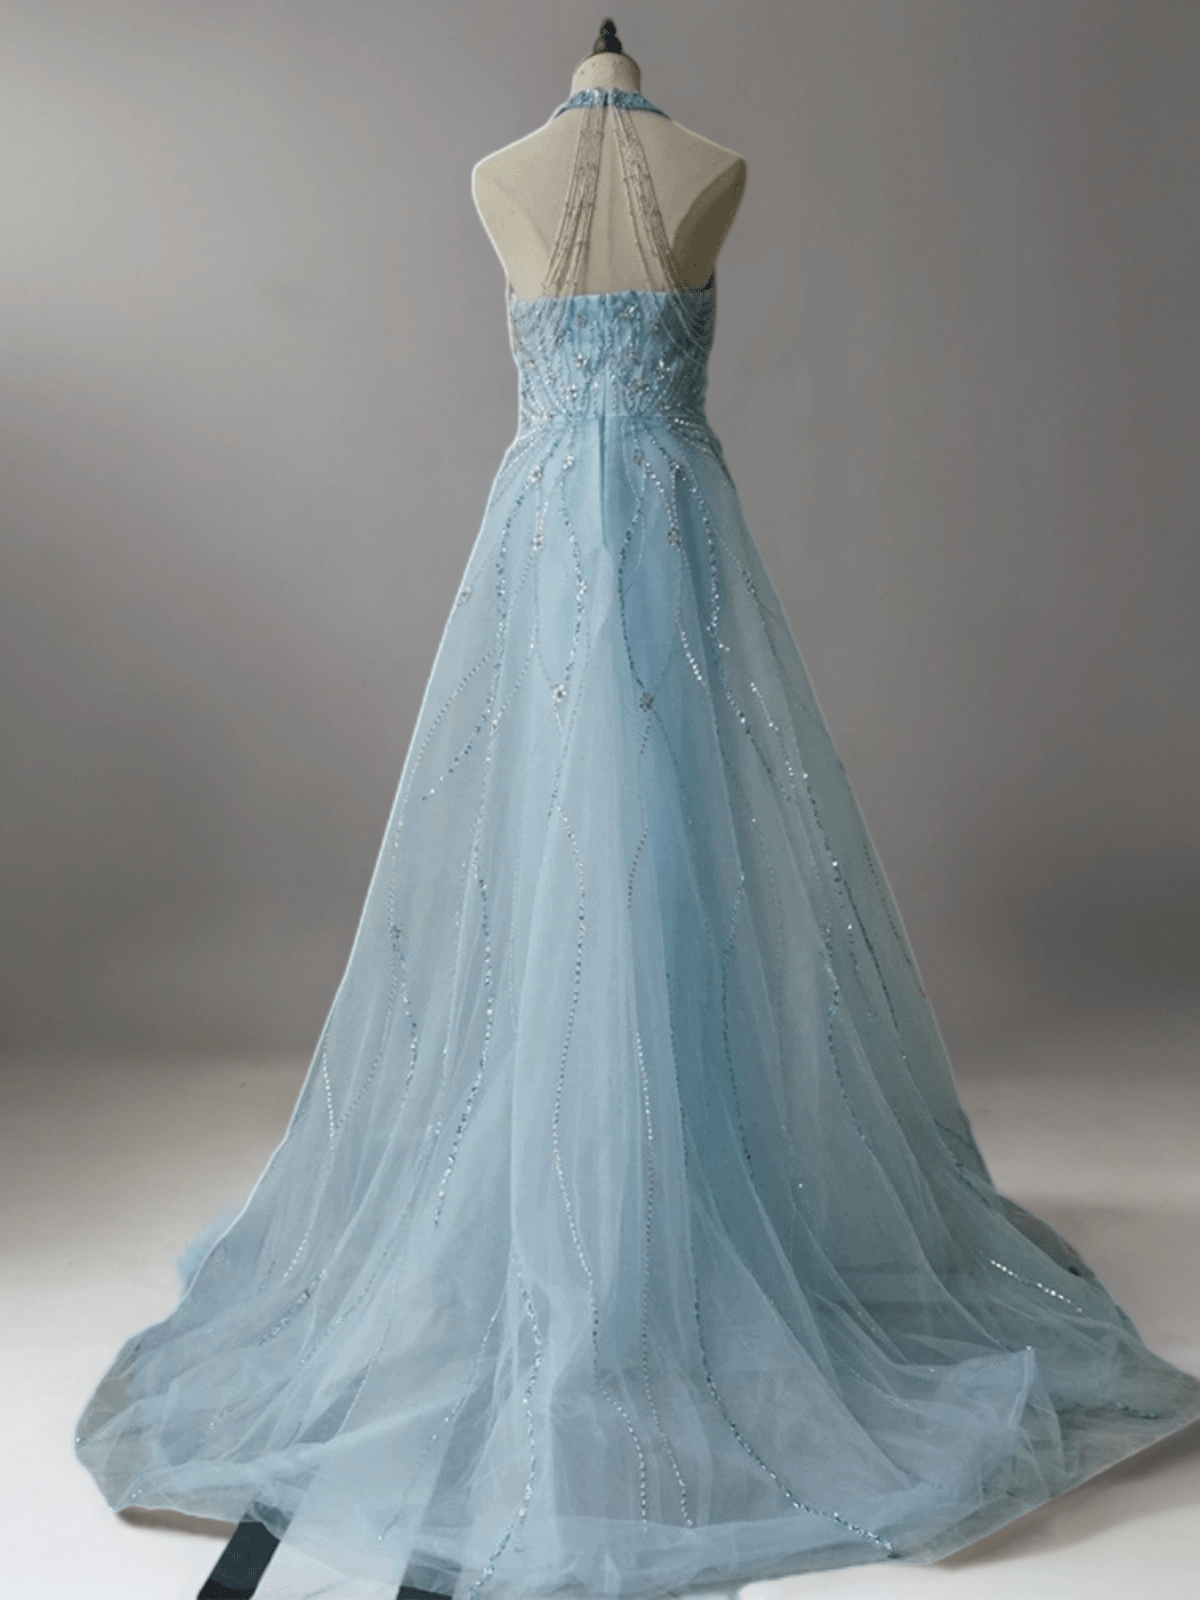 Light Blue Halter Neck Glitter Dress - Elegant Sequin A-Line Evening Gown Plus Size - WonderlandByLilian